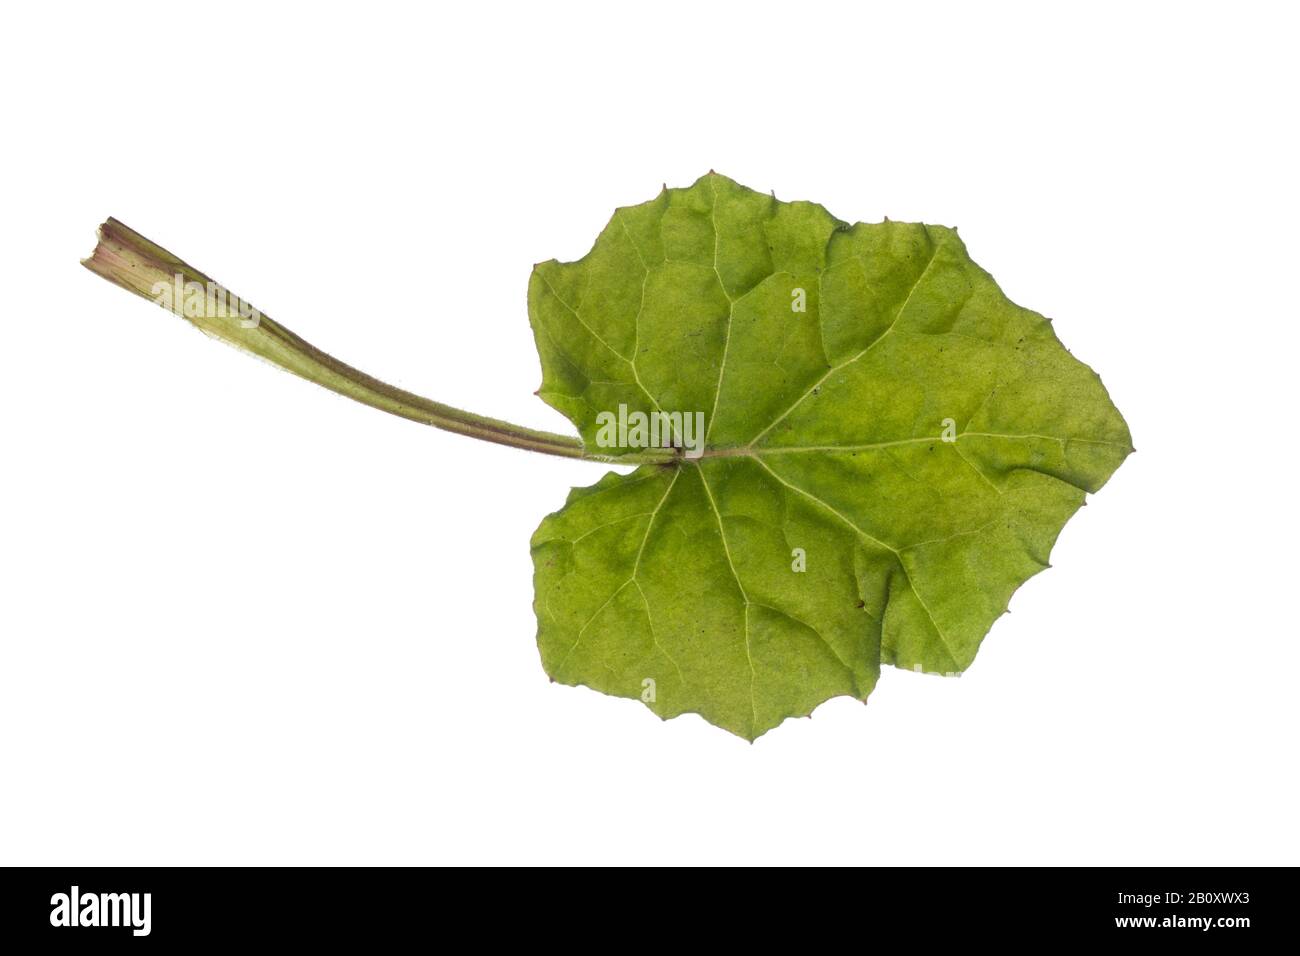 colts-foot, coltsfoot (Tussilago farfara), leaf, cutout, Germany Stock Photo